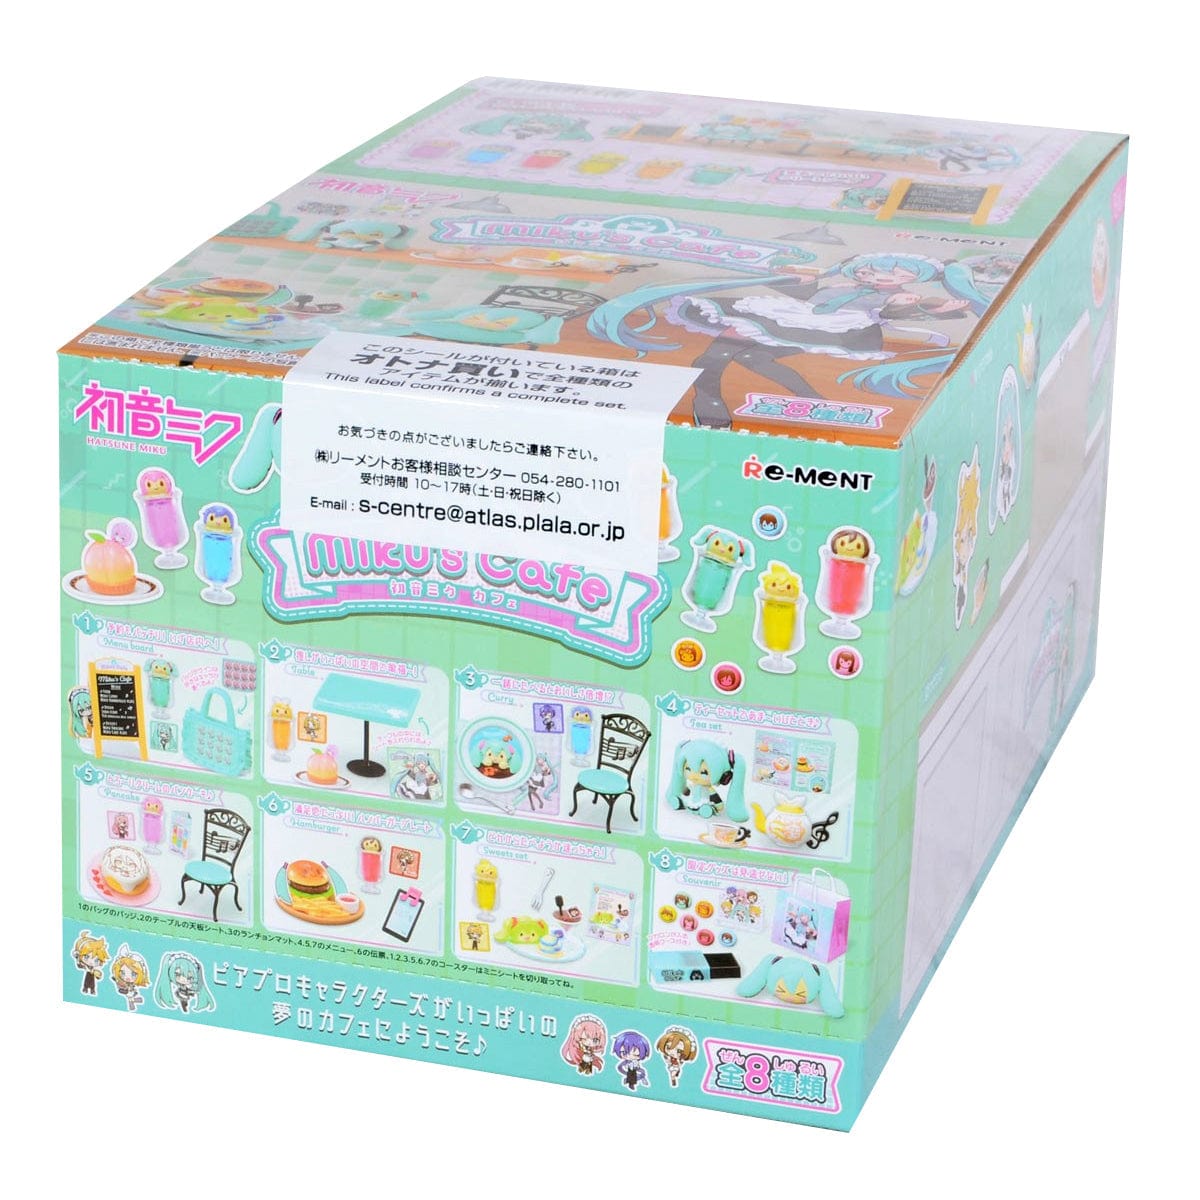 JBK Rement Hatsune Miku MIKU's Cafe Surprise Box Kawaii Gifts